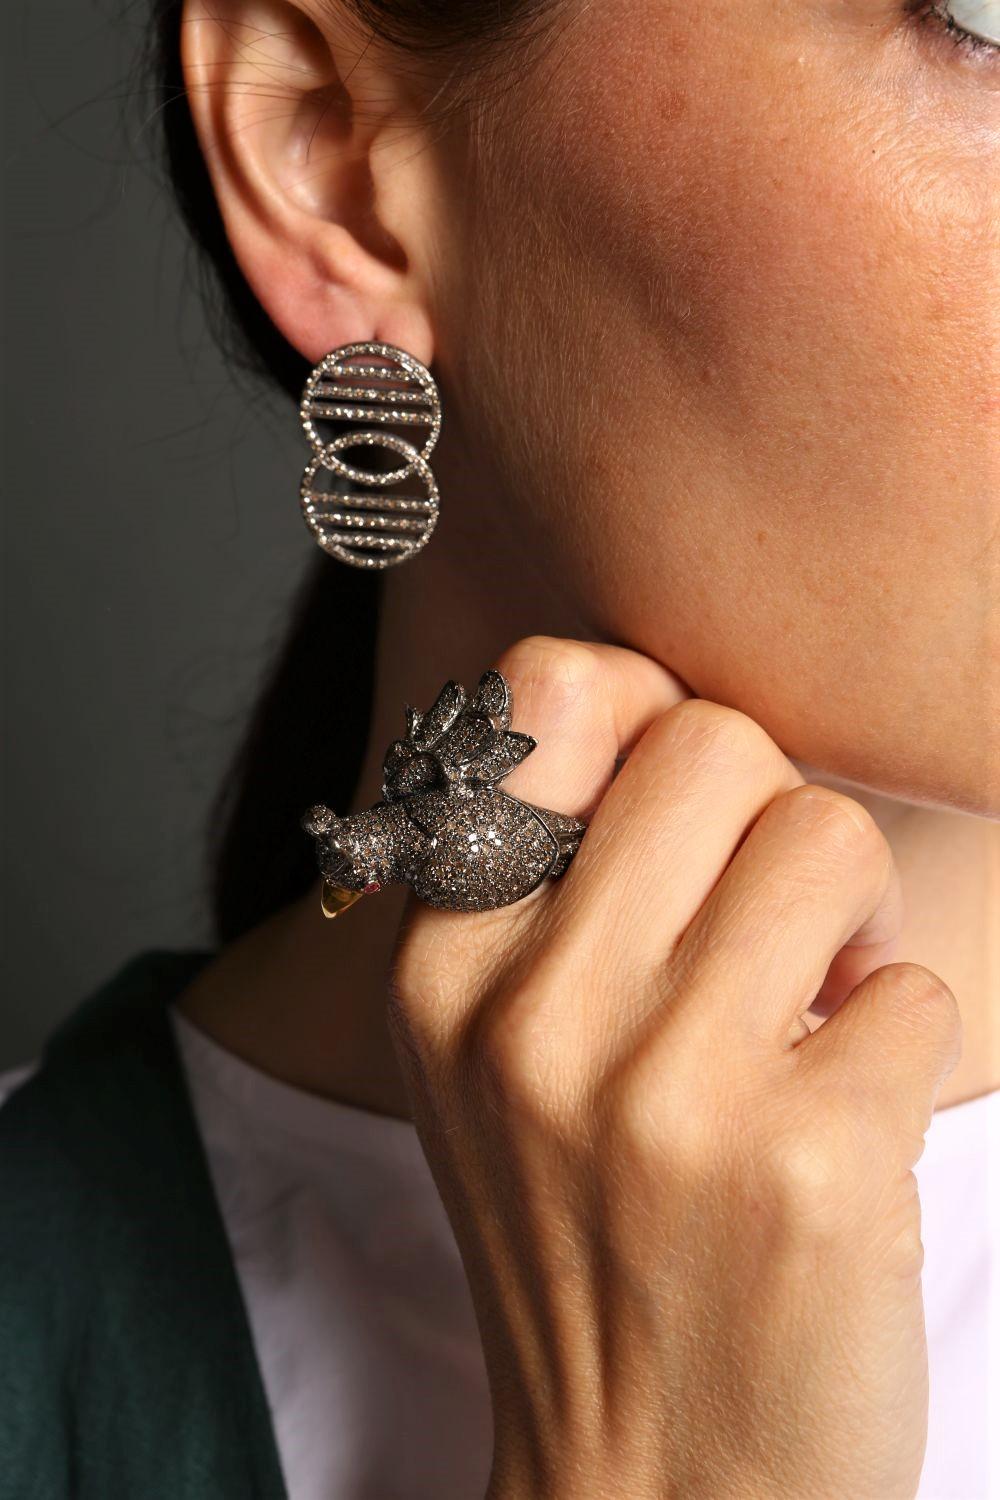 Double Diamond Gridded Earrings In New Condition For Sale In London, W1U 2JG